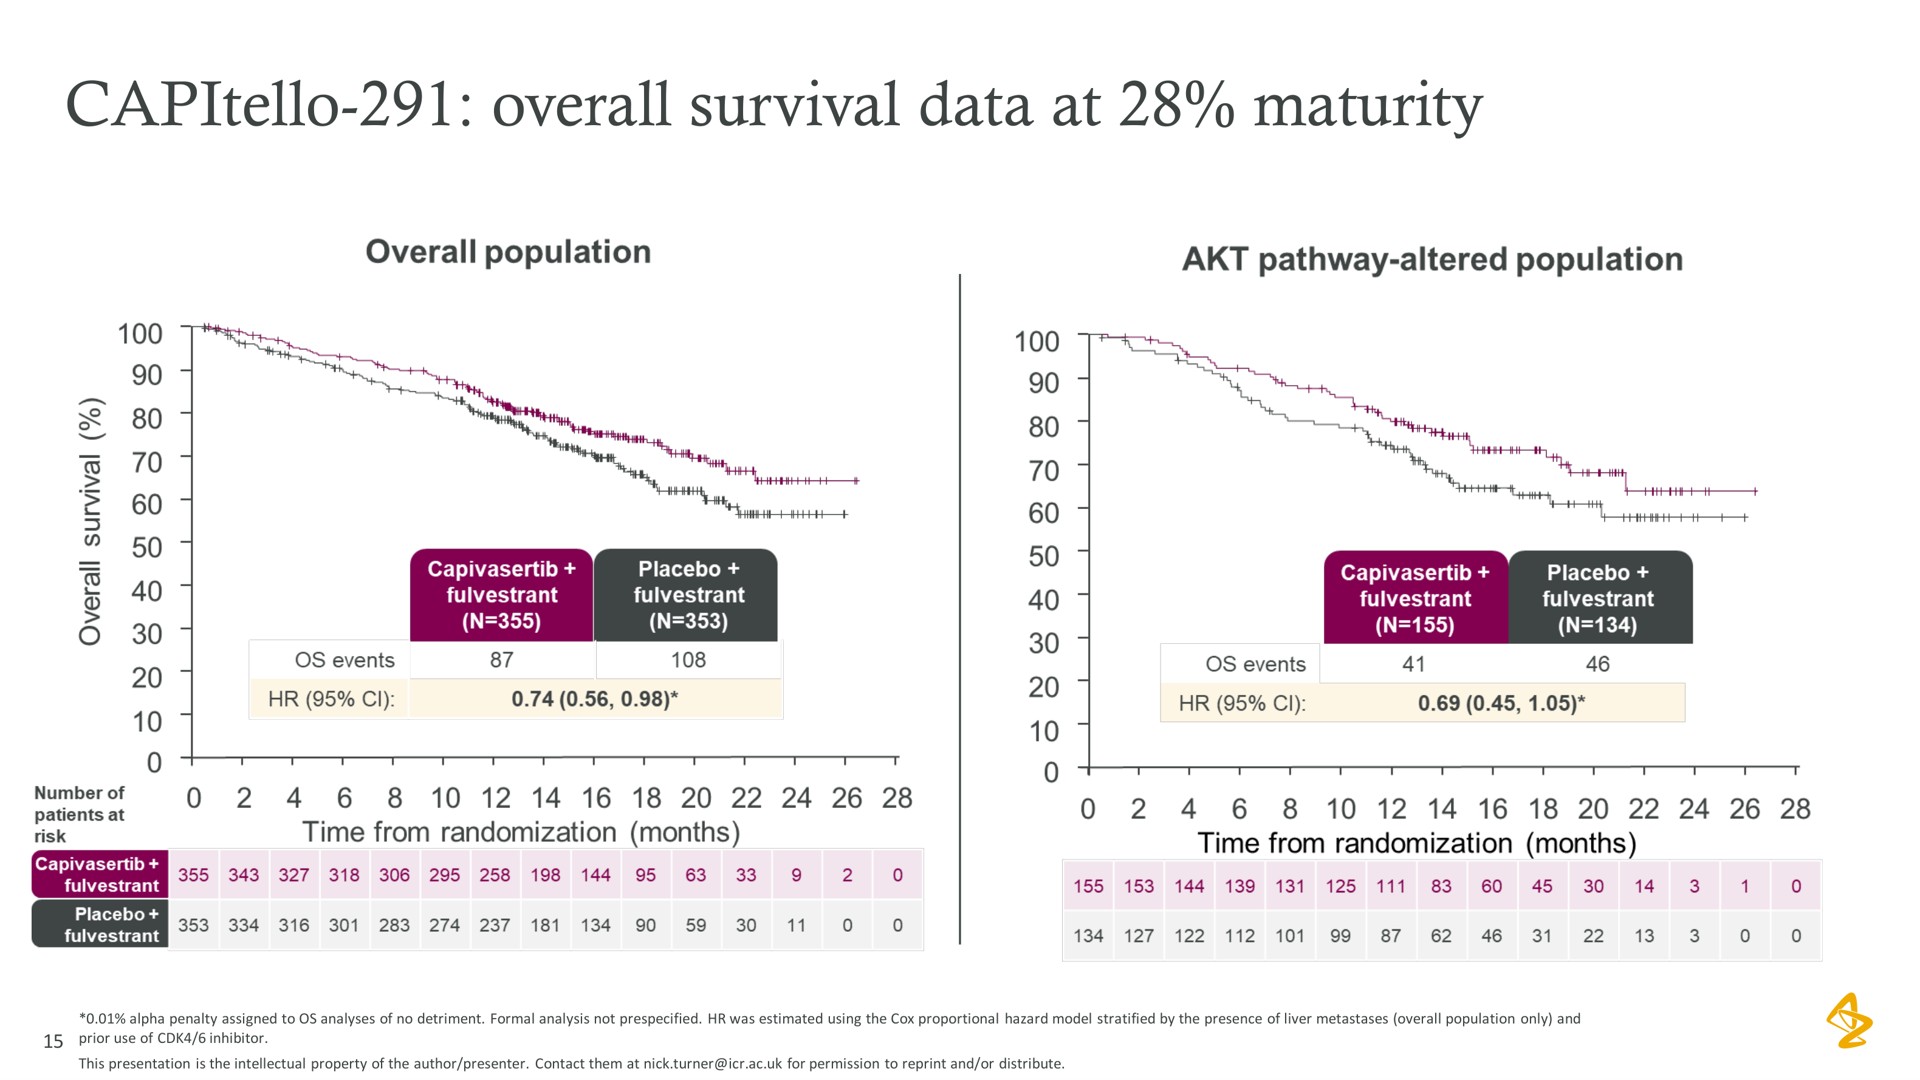 overall survival data at maturity | AstraZeneca